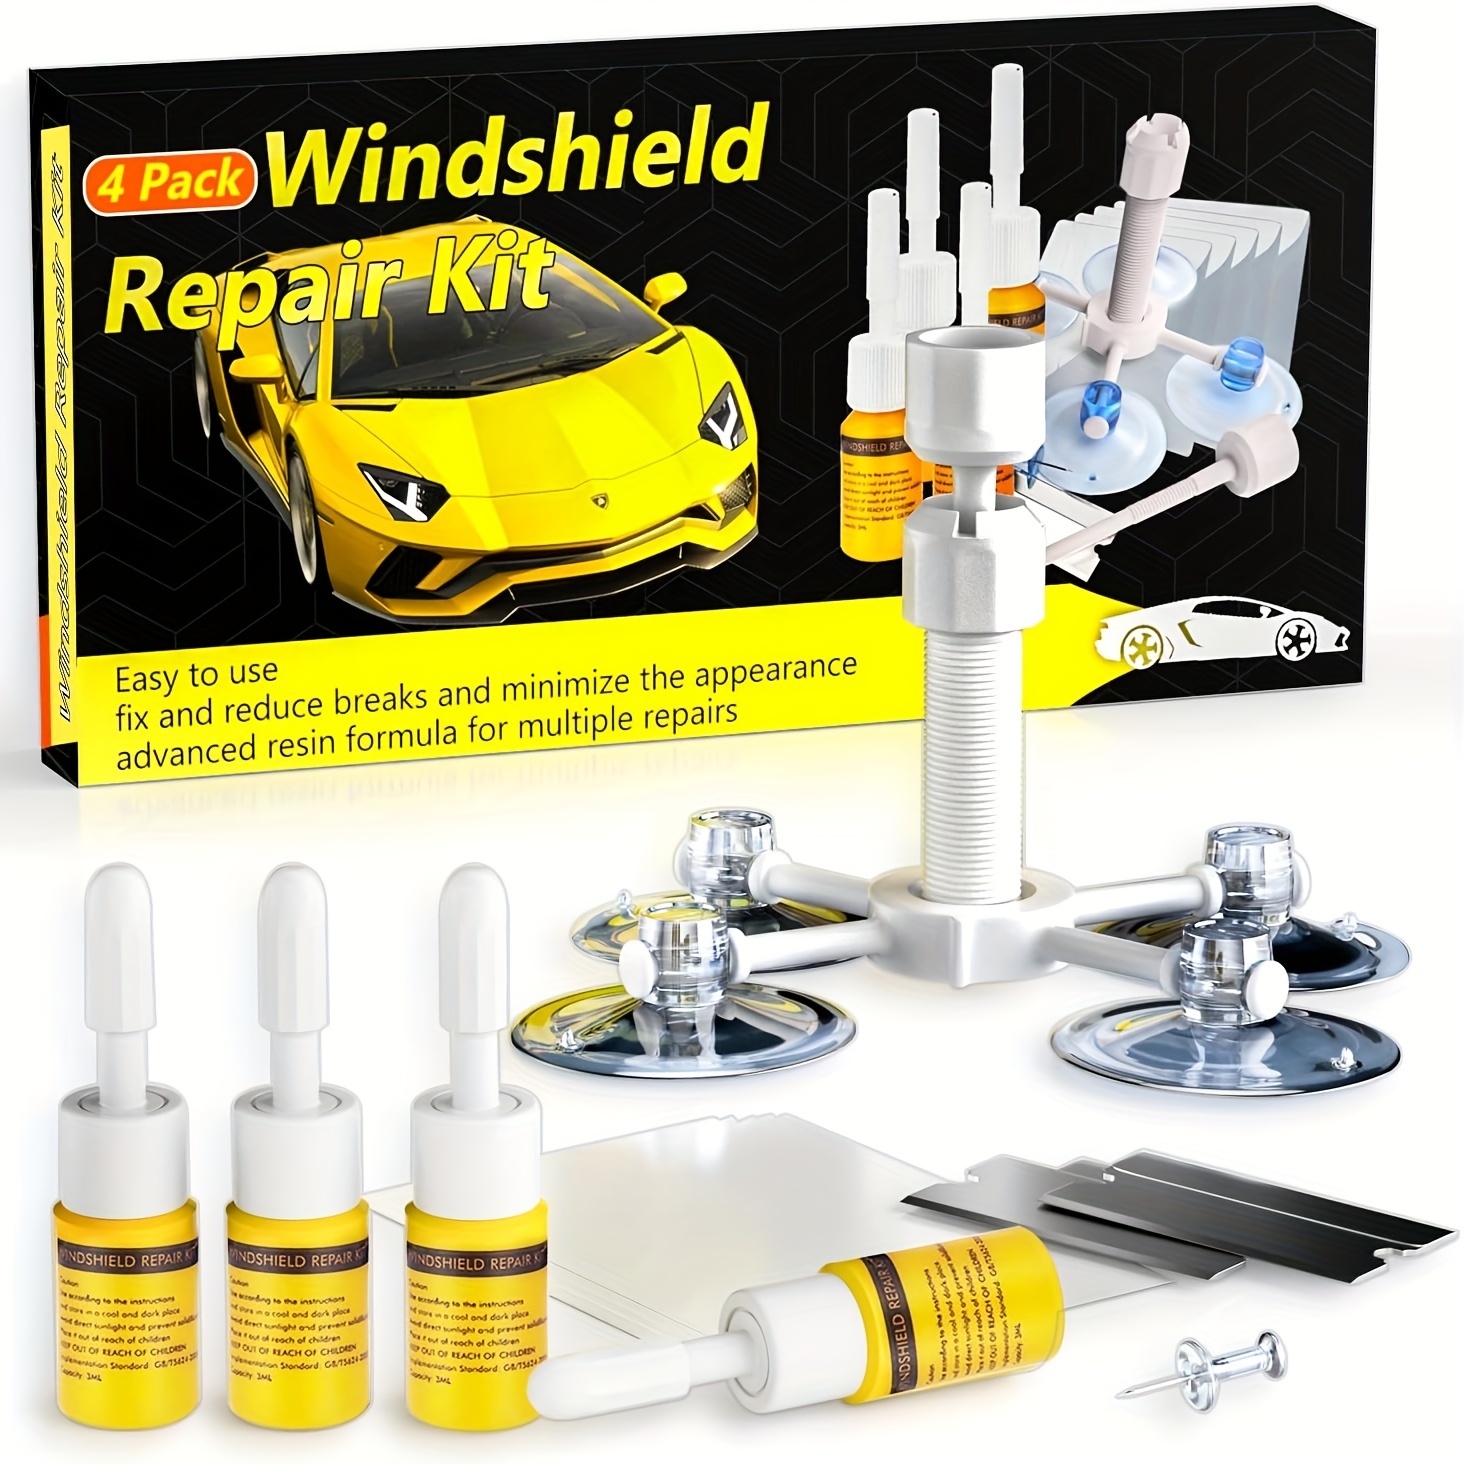 

Windshield Repair Kit, Nano Glass Repair Fluid 4 Pcs, Windshield Repair Kit For Chips And Cracks, Cracks Gone Glass Repair Kit Automotive Quick Fix For Chips, Cracks, Star-shaped, -eye